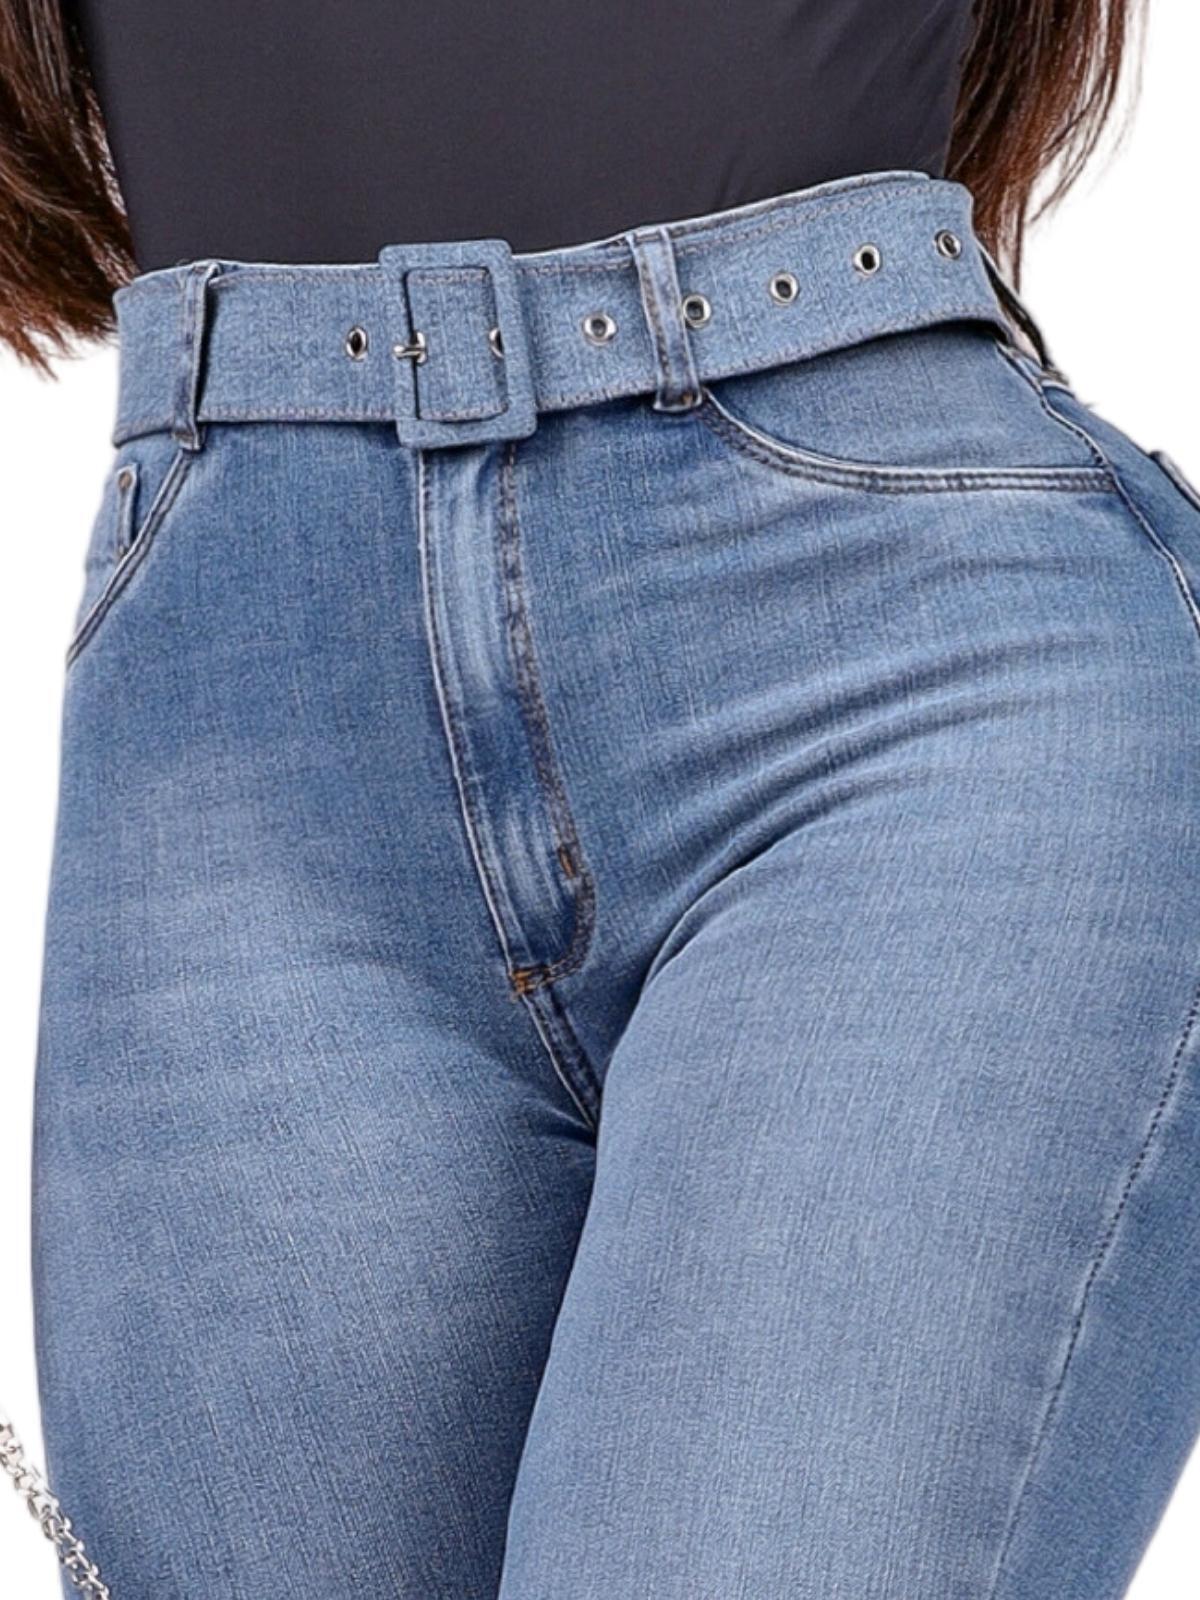 Comprar Calça Jeans Feminina c/cinto-Bi strech 360-LD2101 - Loyal